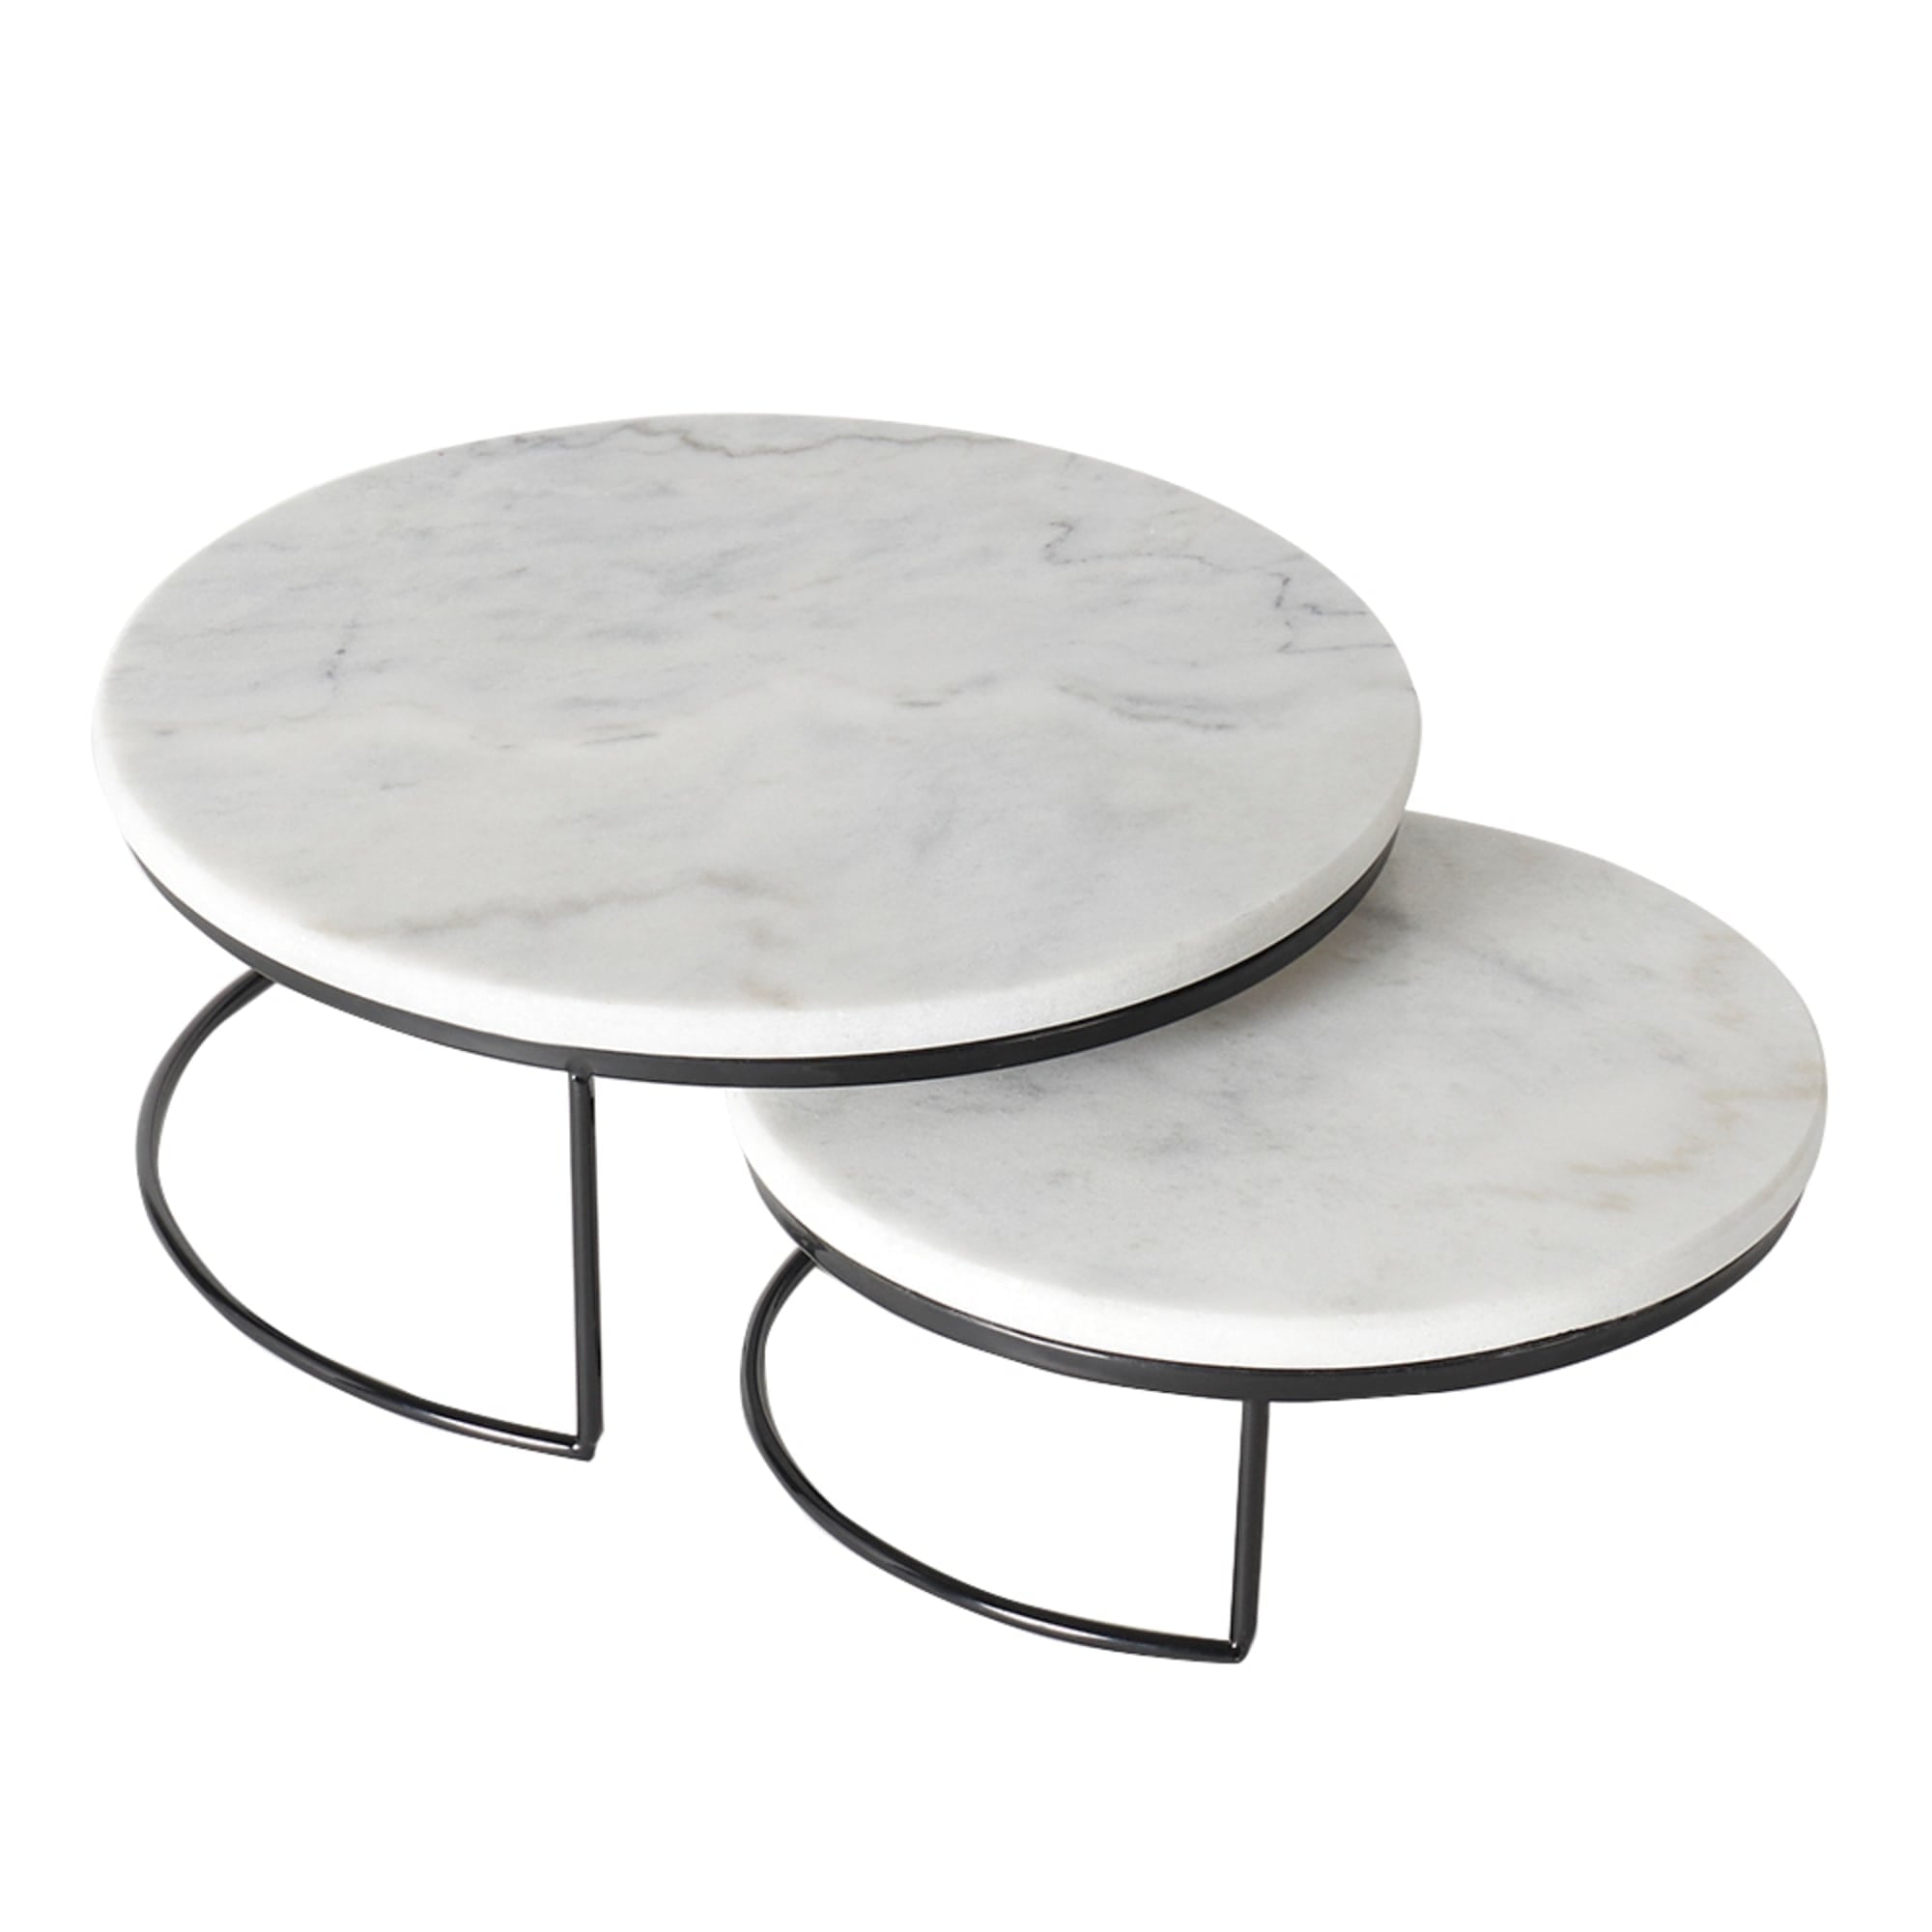 Sophia Grace 2 Piece Nesting Marble Tabletop Risers, White/Black $15.00 EACH, CASE PACK OF 4